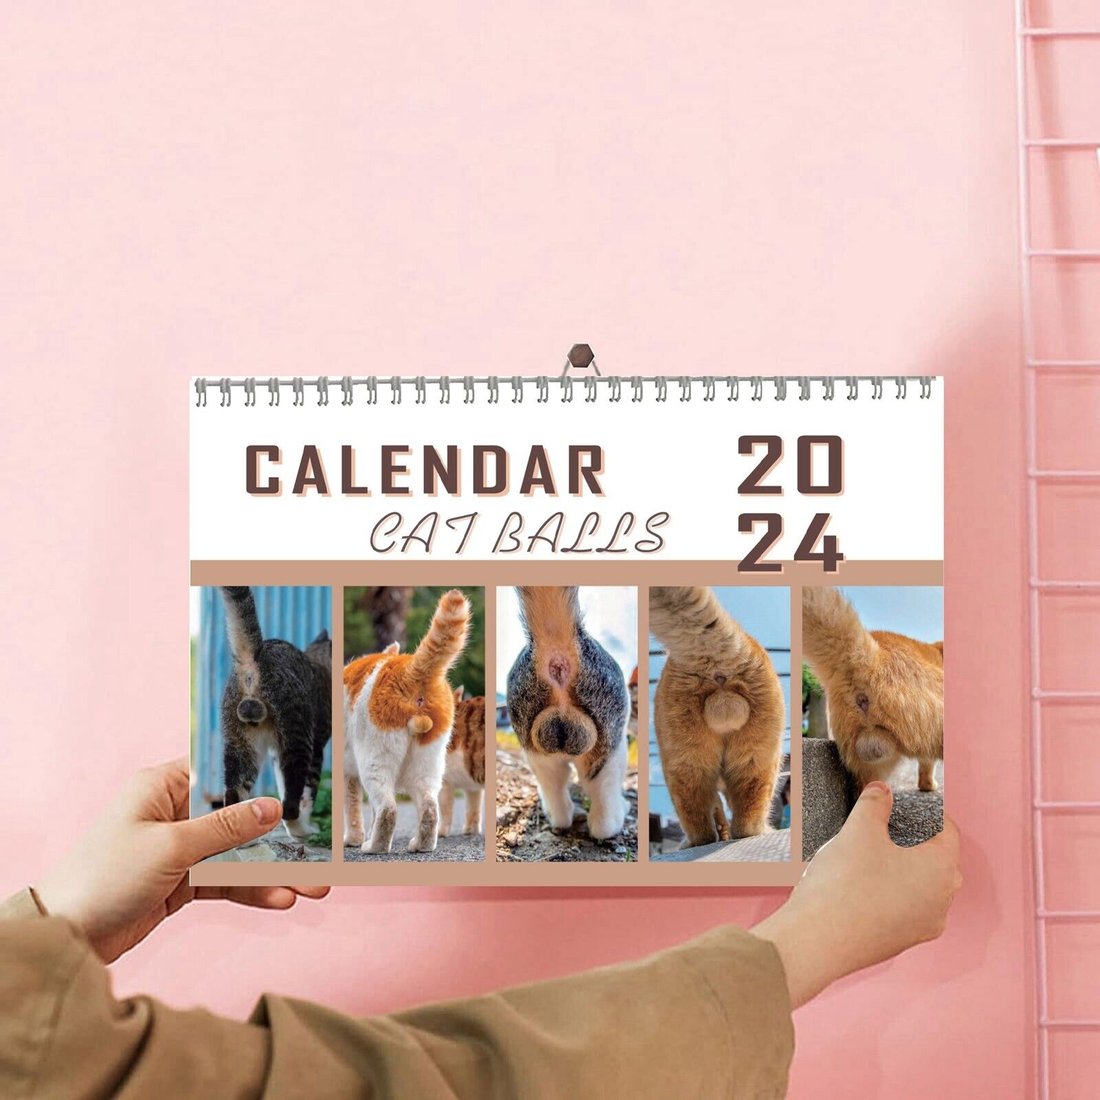 😆Funniest calendar of the century|